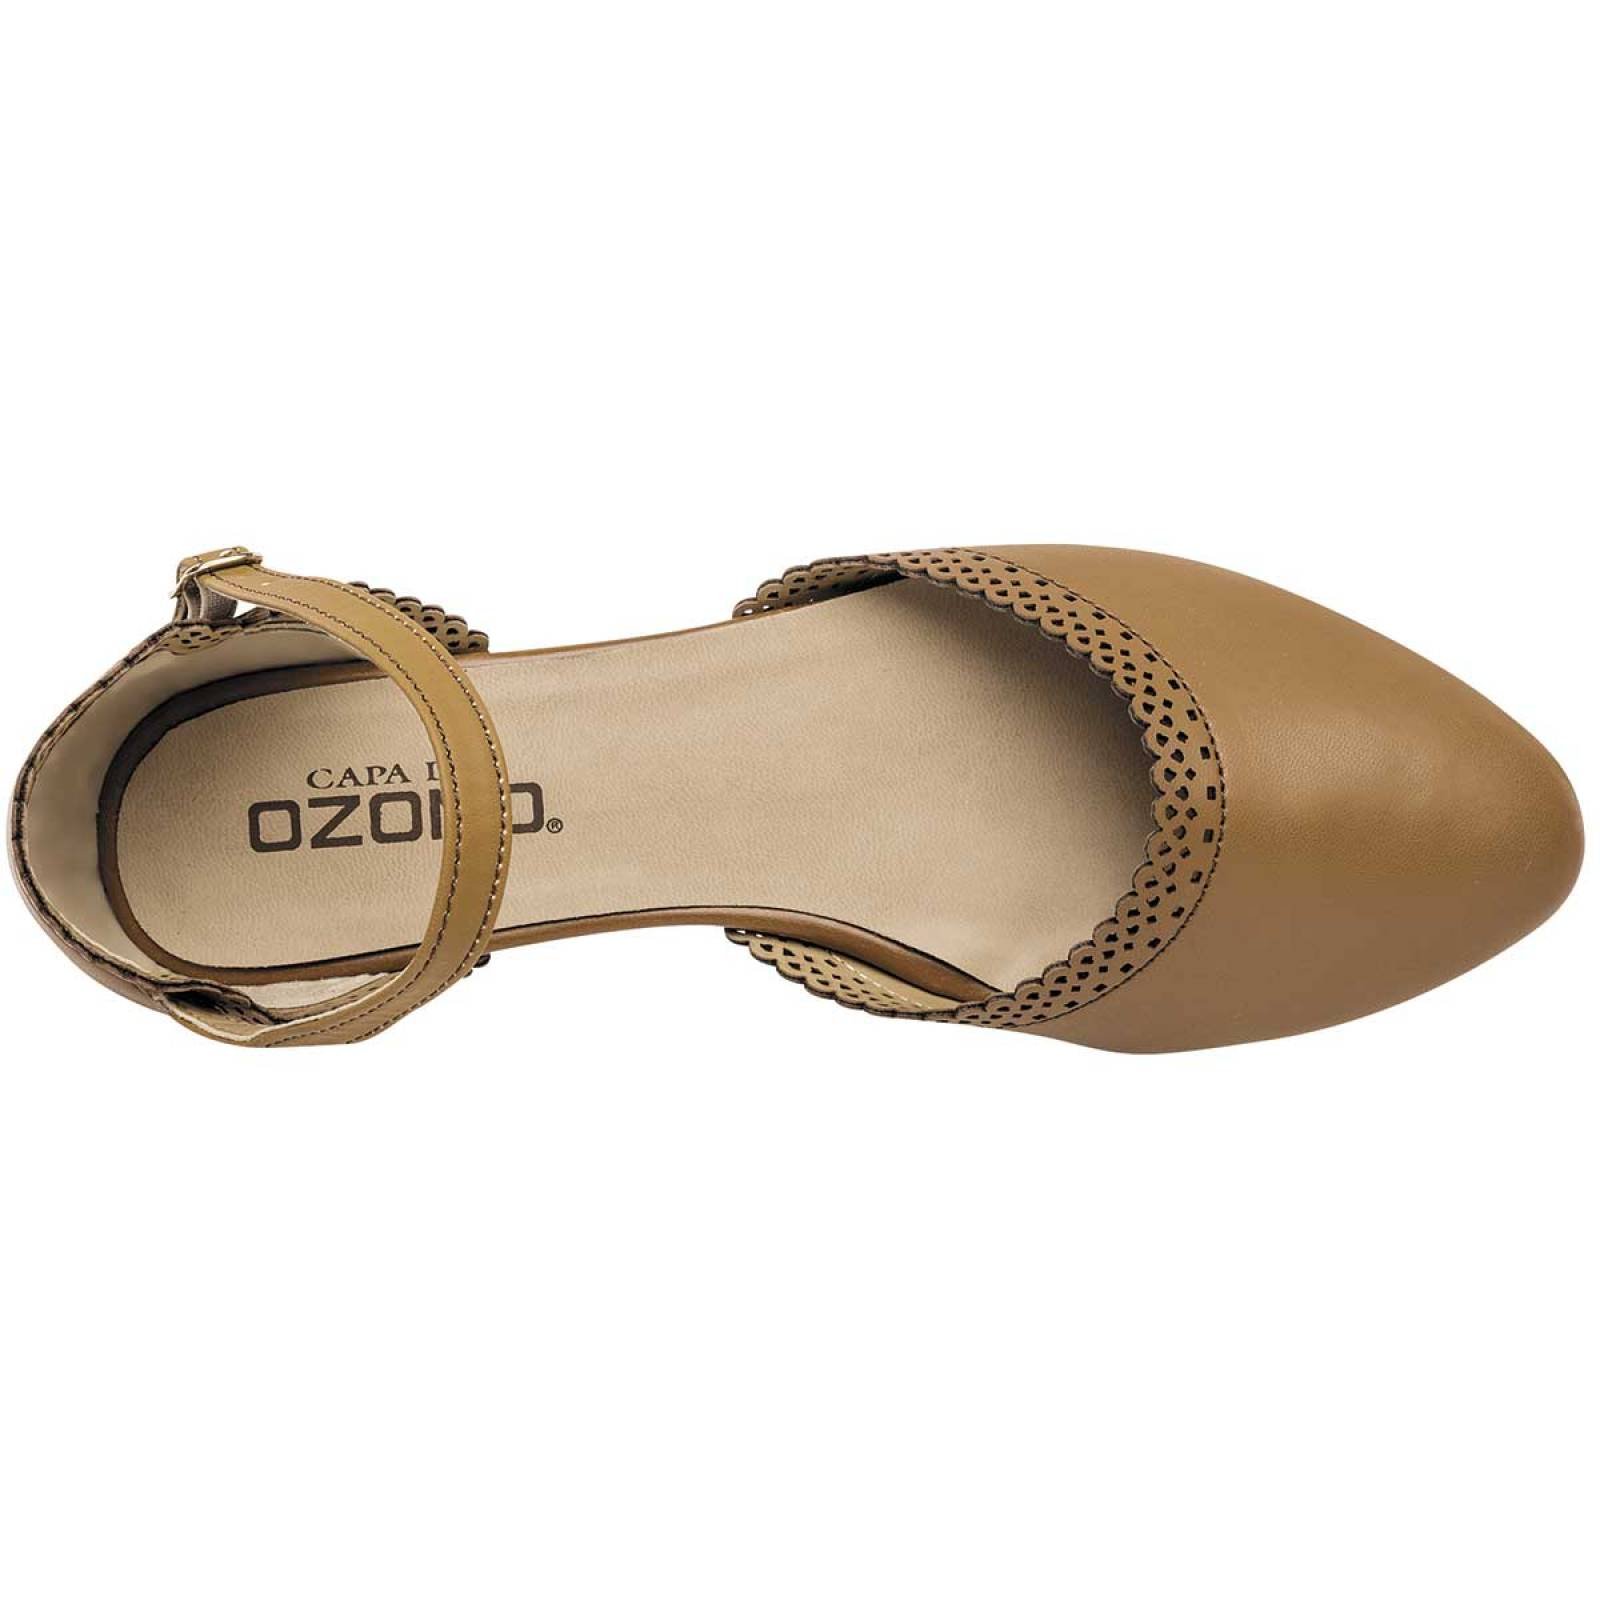 Capa de ozono Zapato Mujer Camel